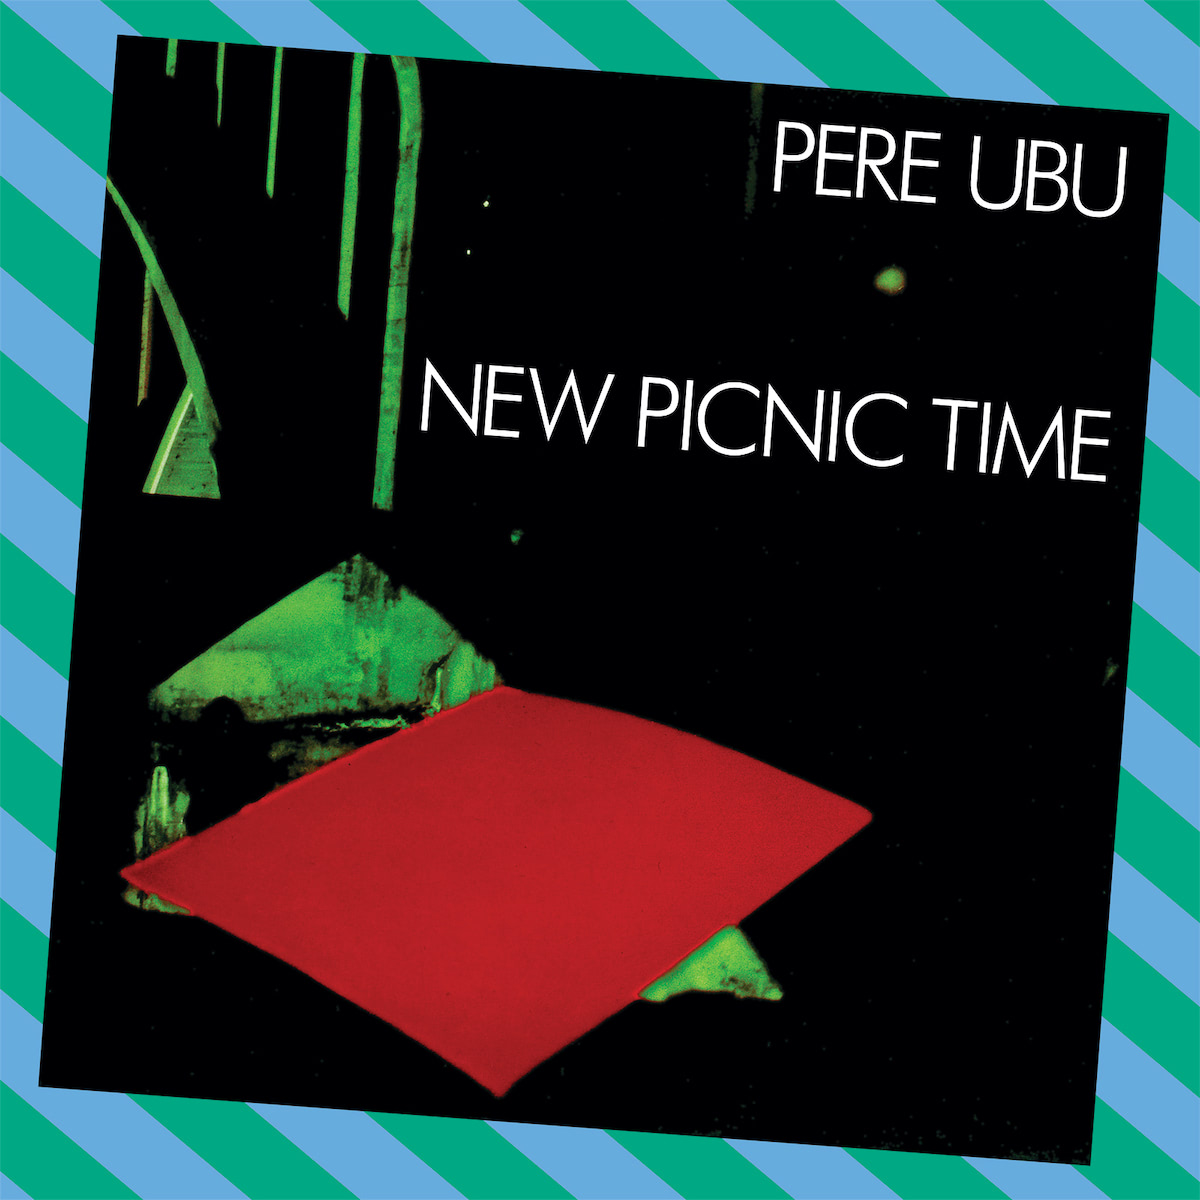 Pere Ubu New Picnic Time